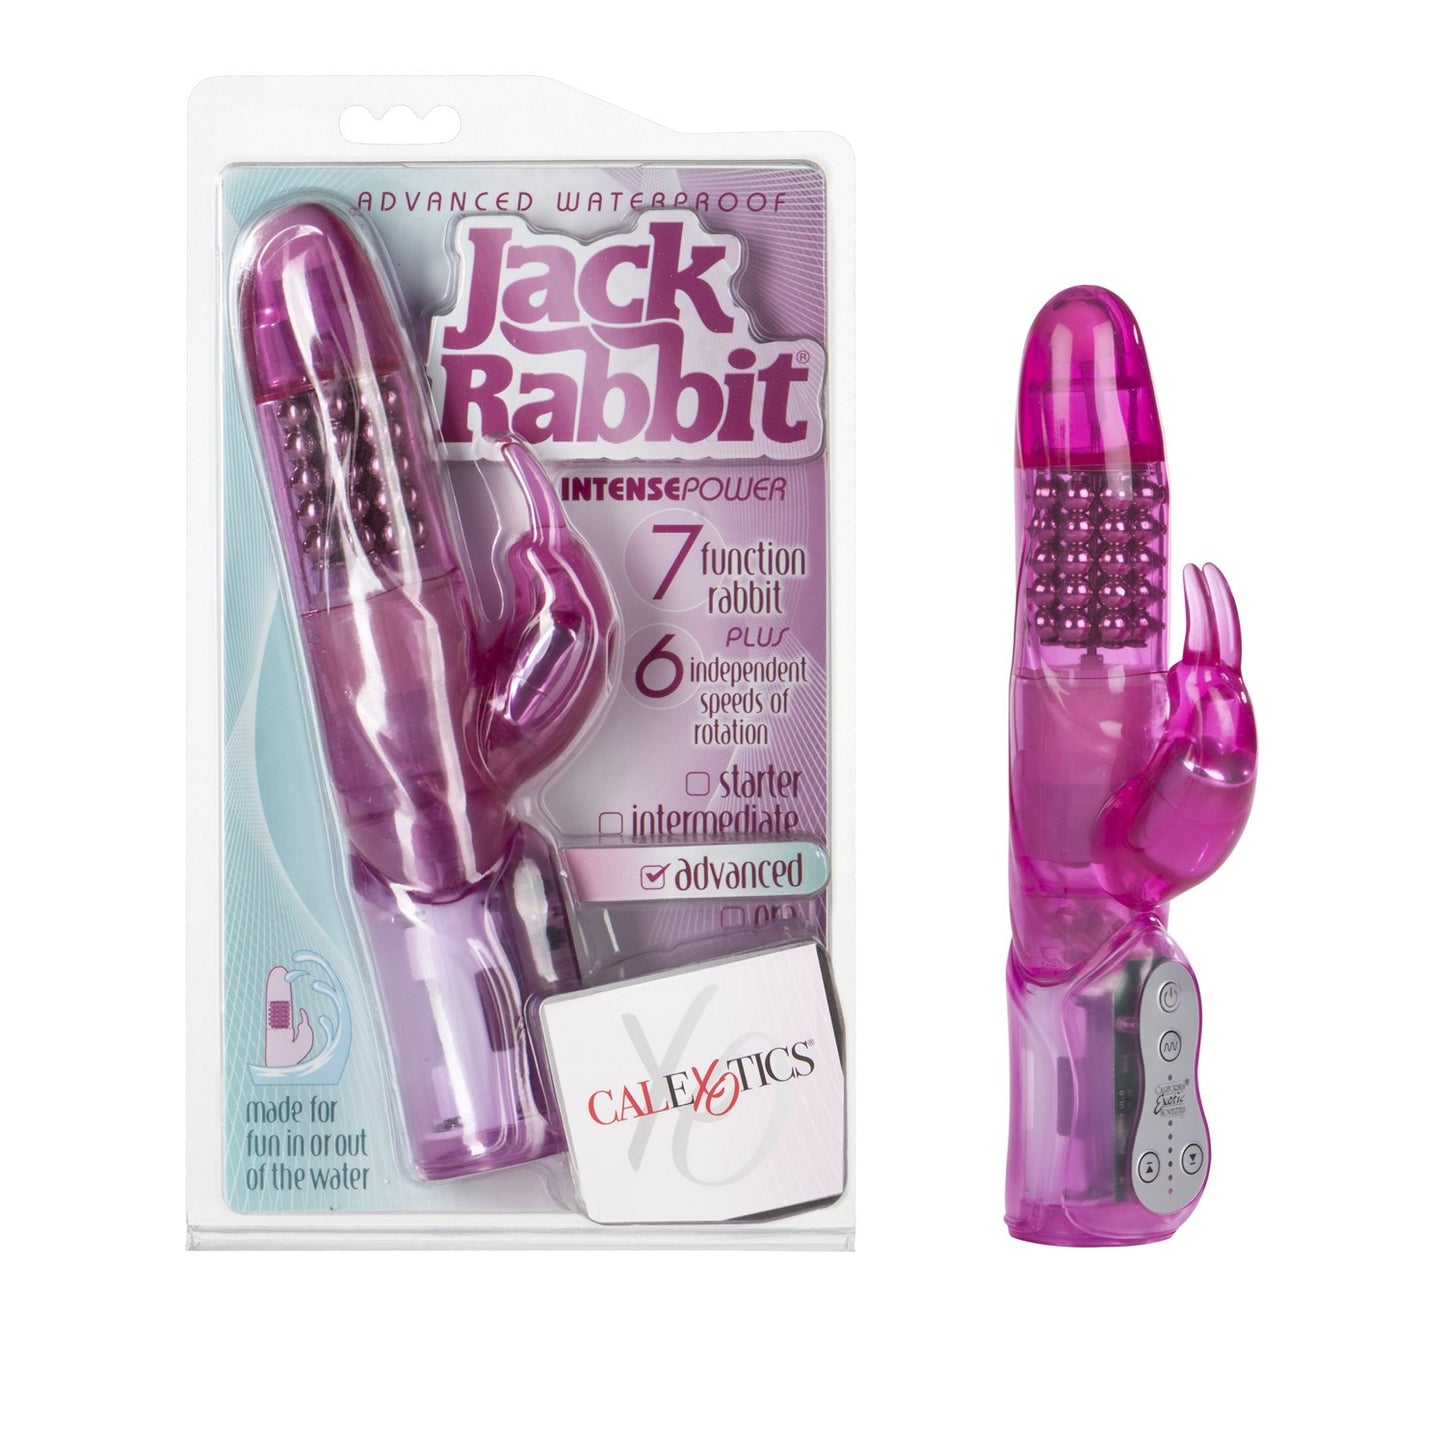 Jack Rabbit Advanced Waterproof Jack Rabbit - 5 Rows